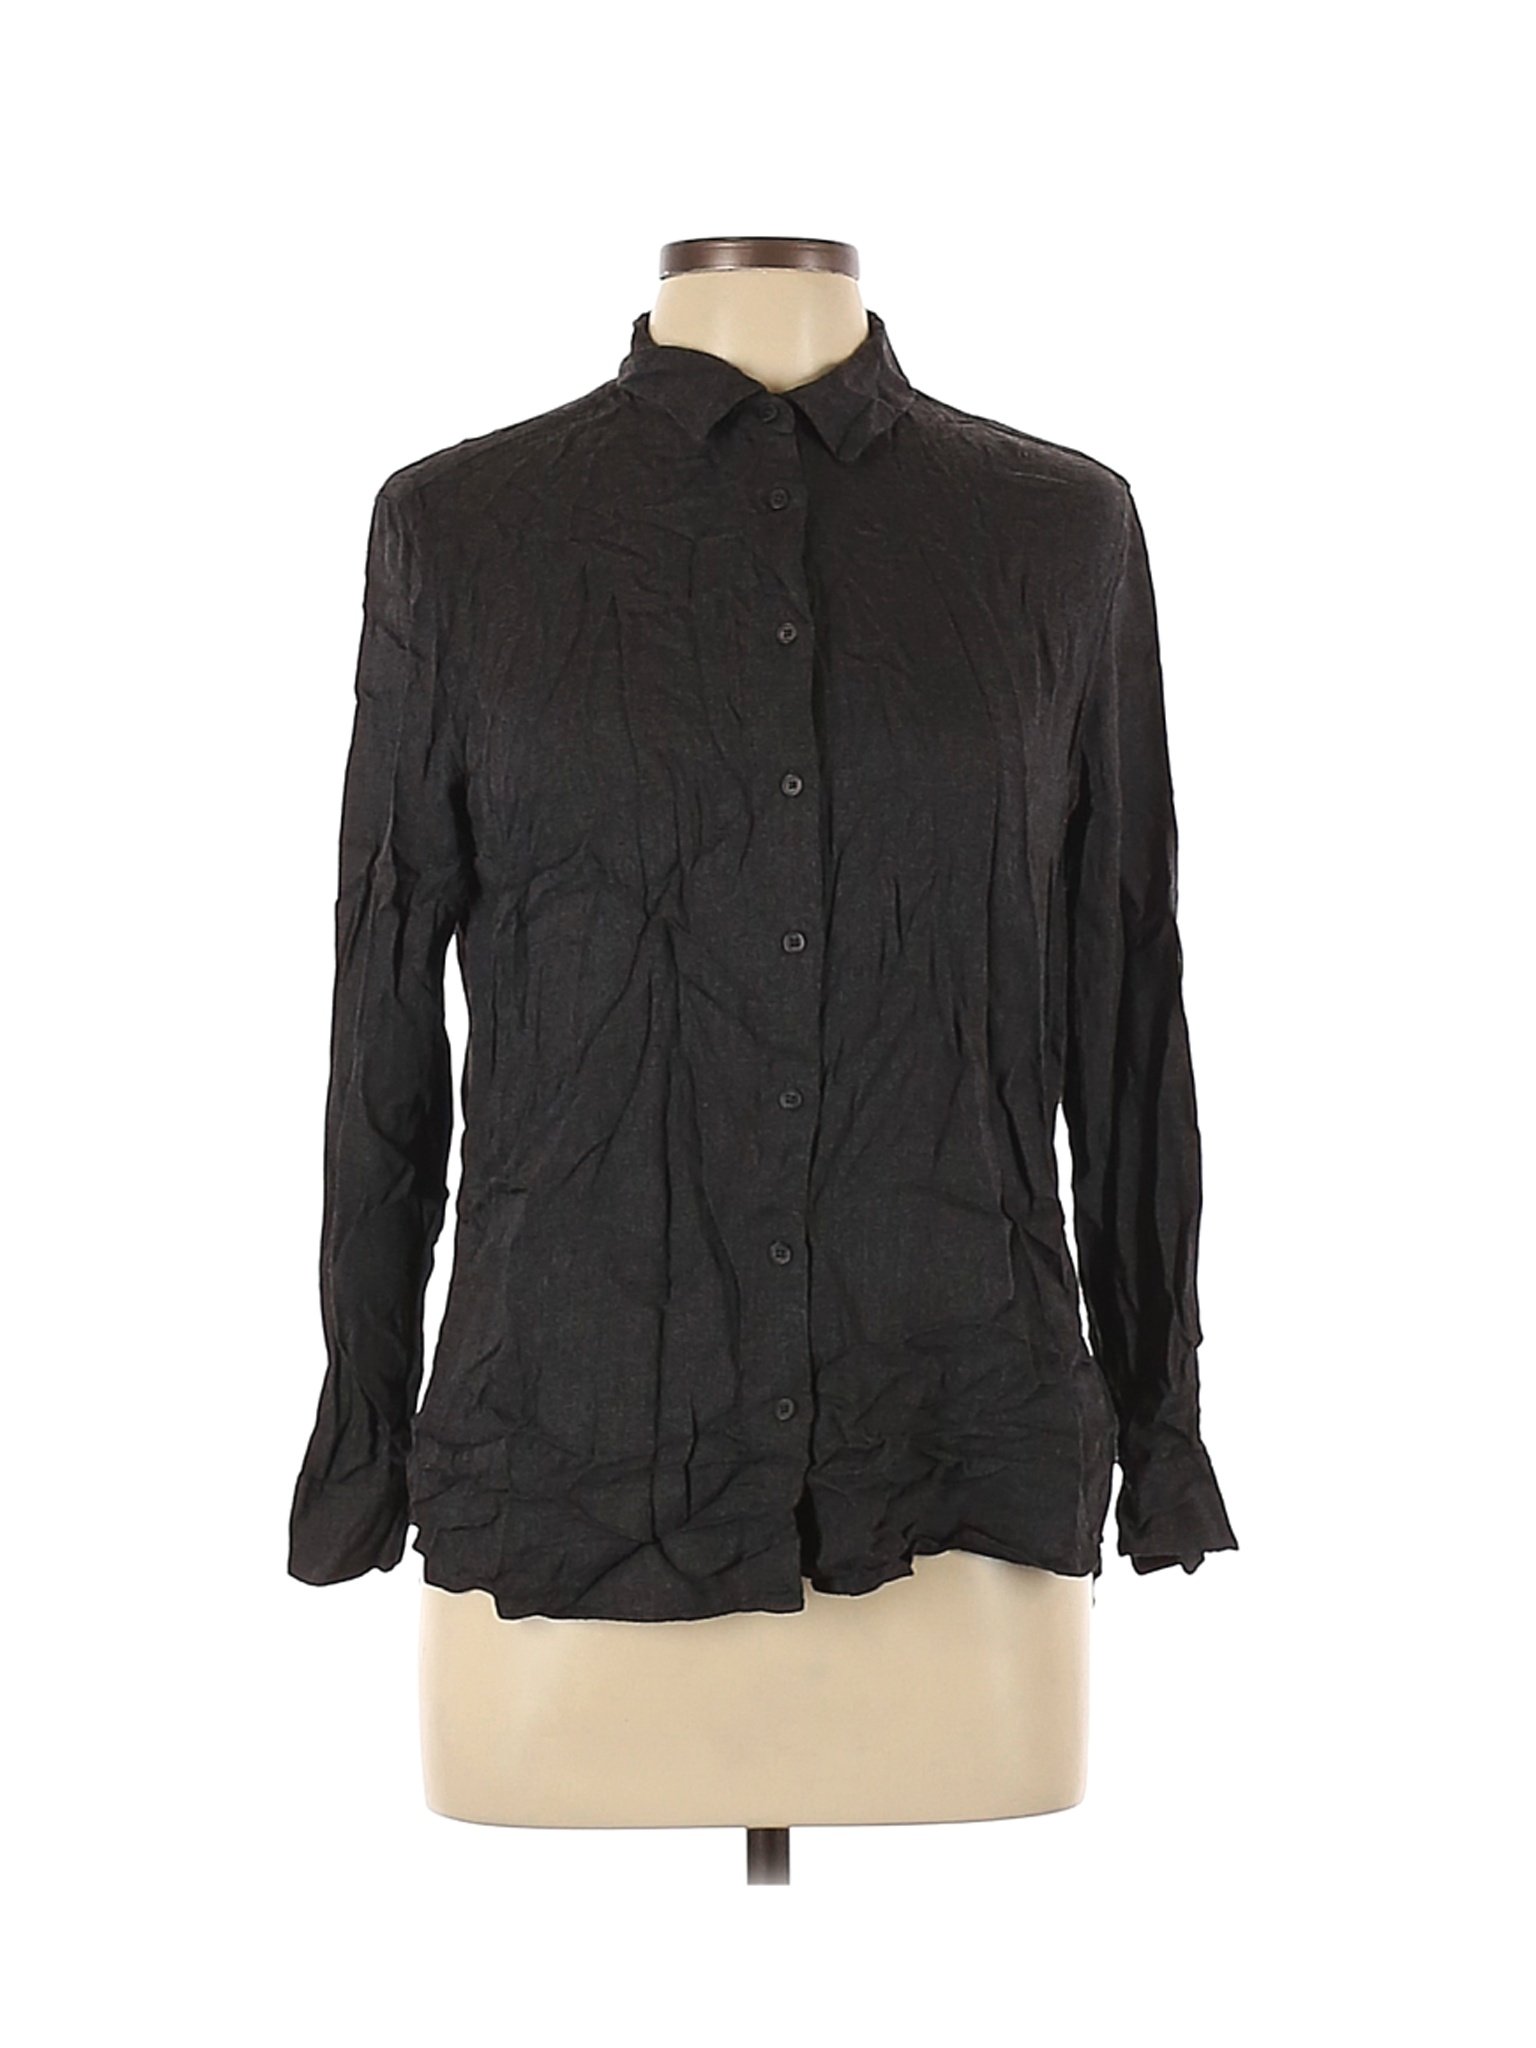 Uniqlo Women Black Long Sleeve Button-Down Shirt L | eBay